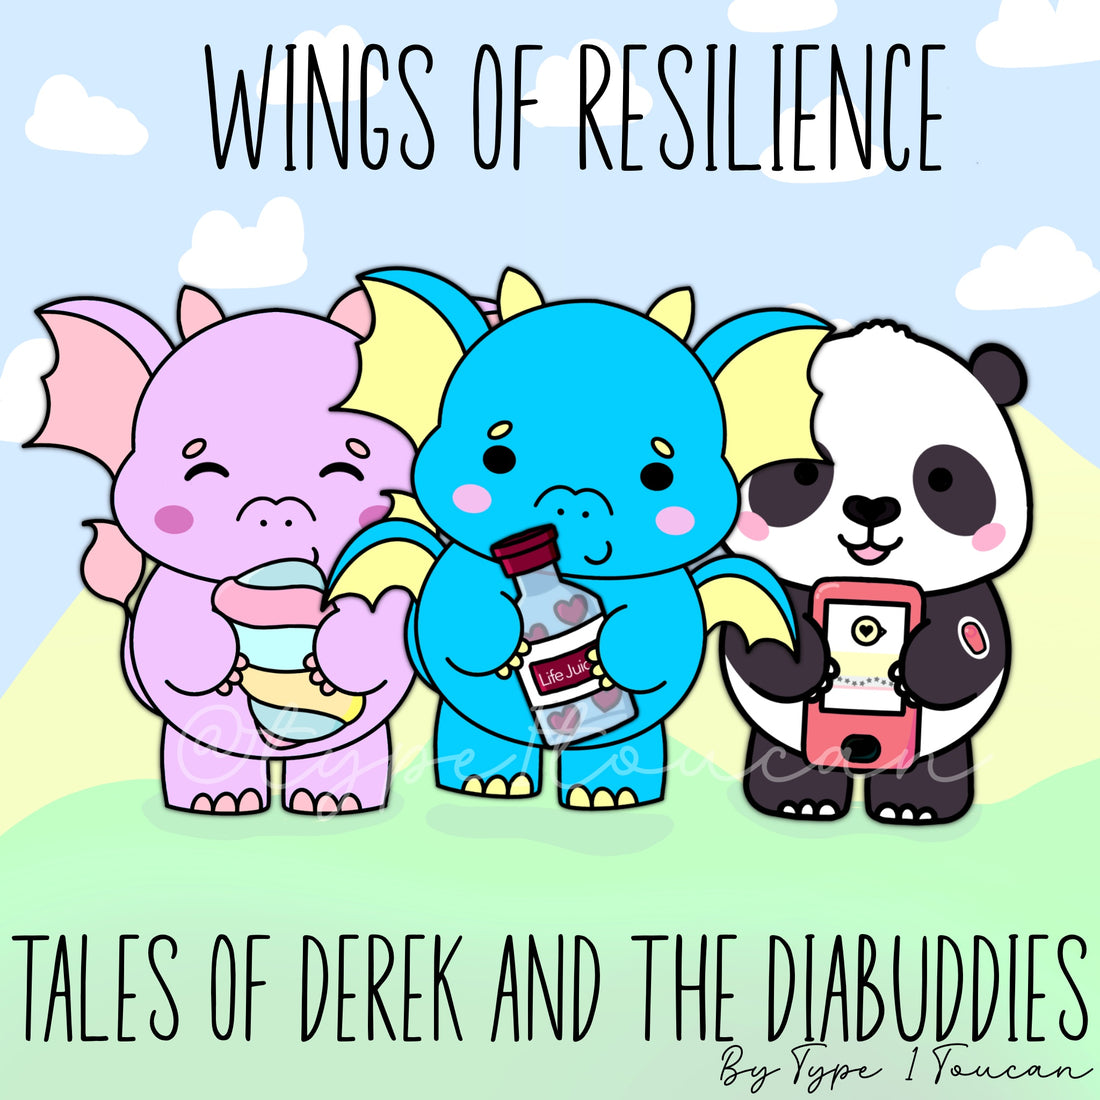 Derek and the Diabuddies Type 1 Diabetes Childrens Stories